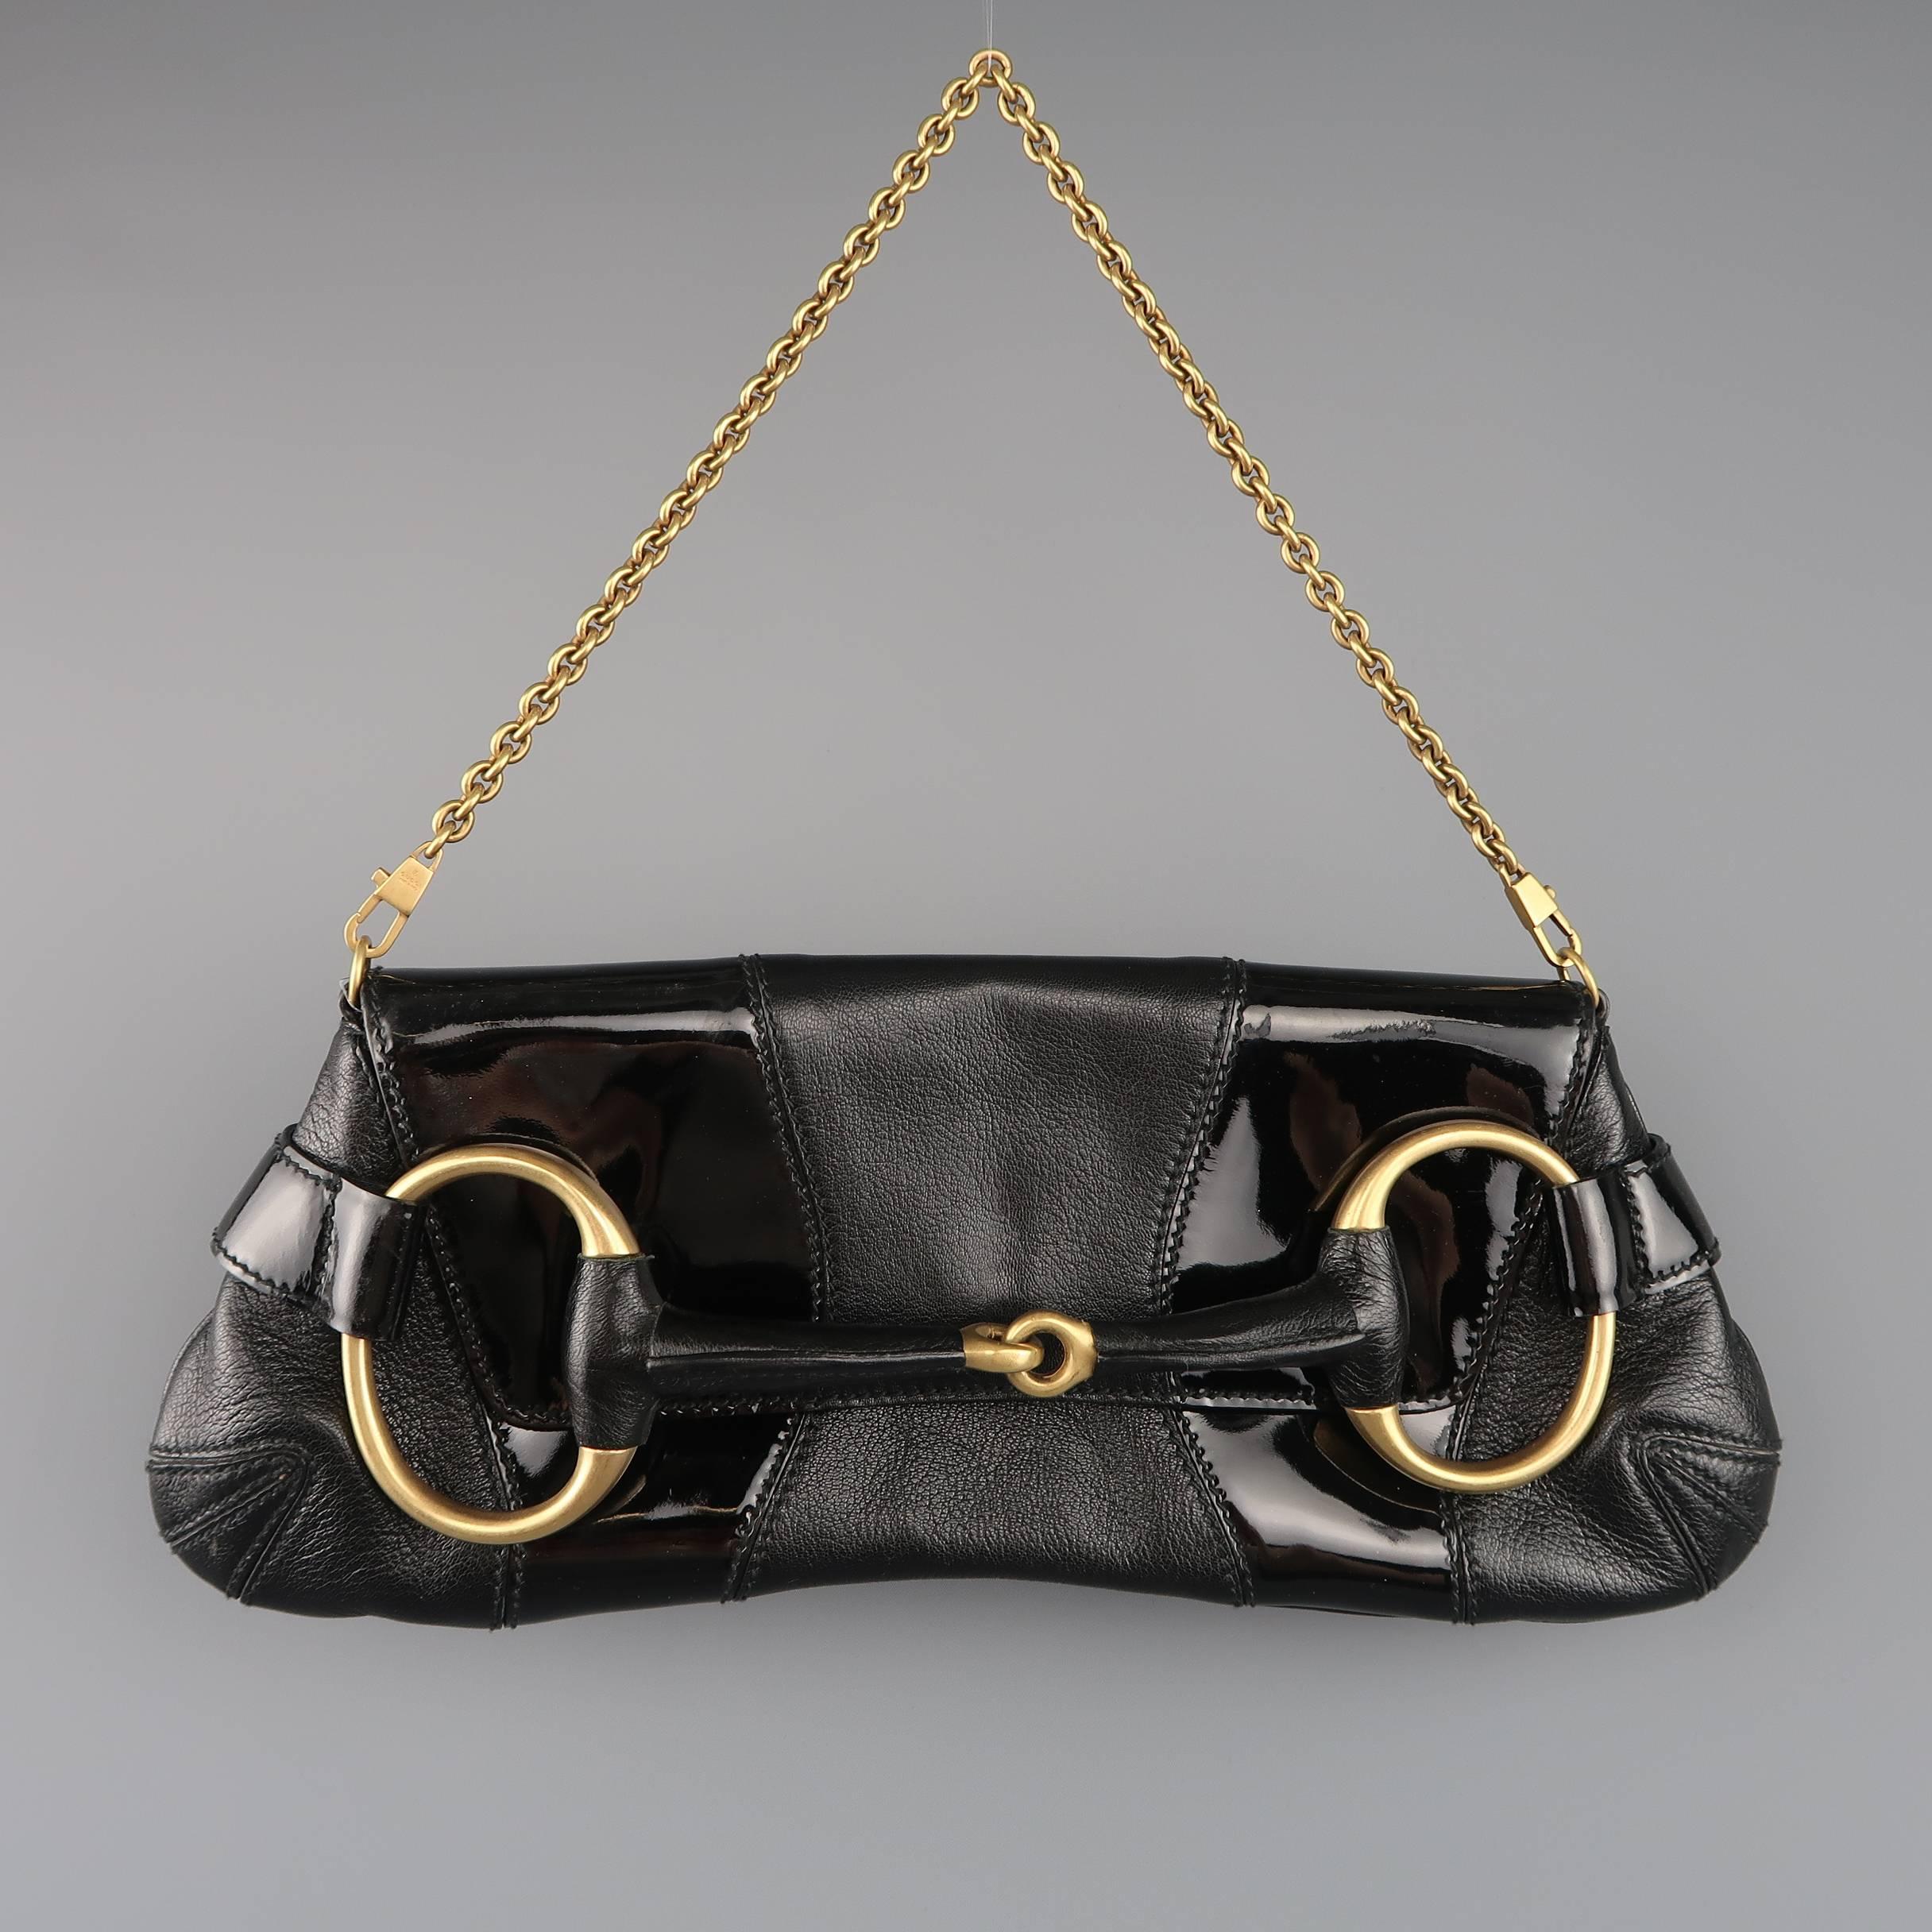 GUCCI Black Patent Leather Panel Gold Horsebit Clutch Handbag 1